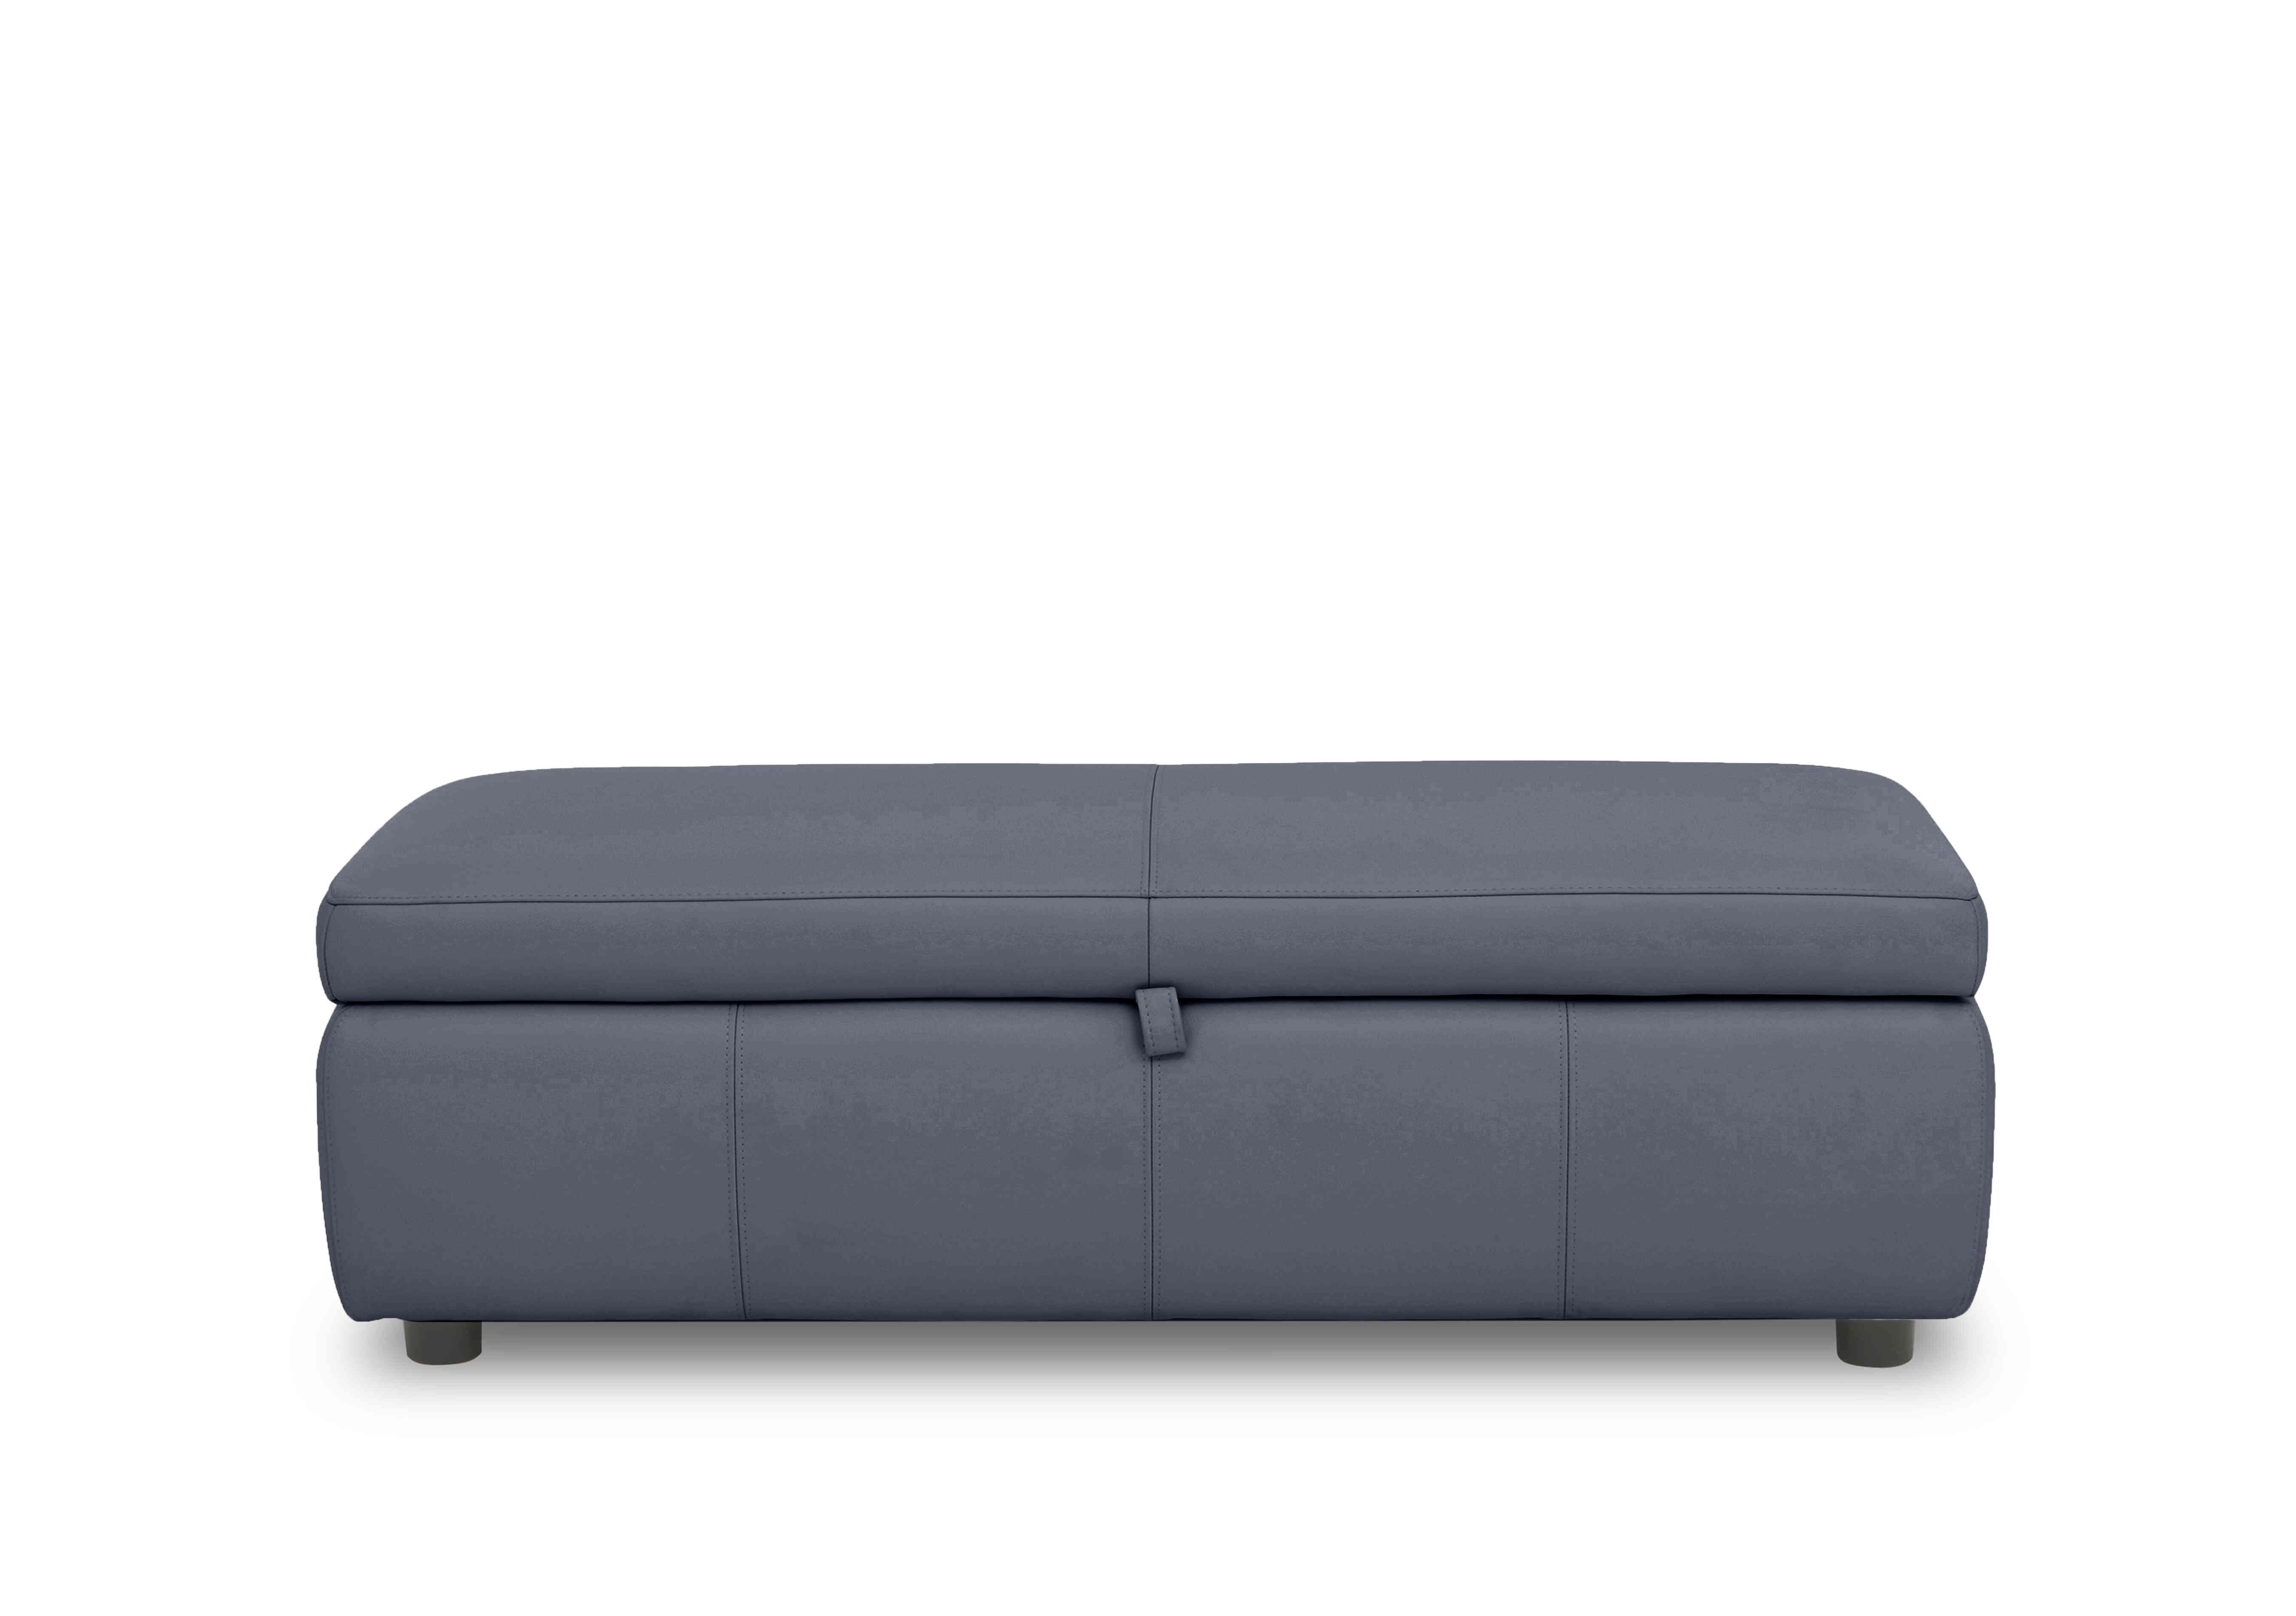 Tyrell 150cm Leather Blanket Box in Bv-313e Ocean Blue on Furniture Village